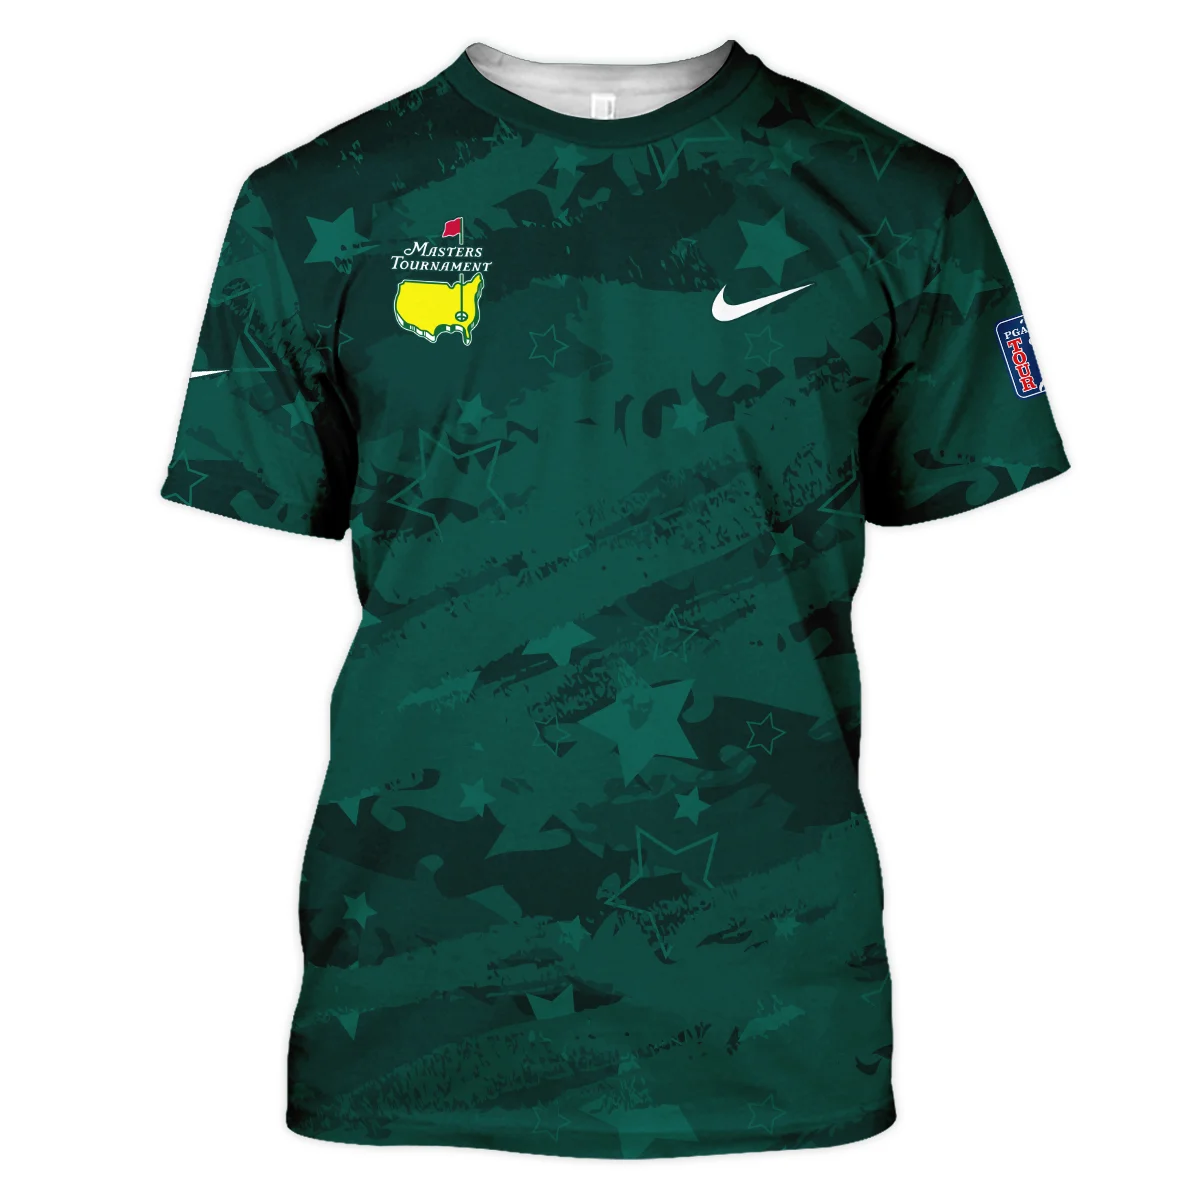 Dark Green Stars Pattern Grunge Background Masters Tournament Nike Unisex T-Shirt Style Classic T-Shirt